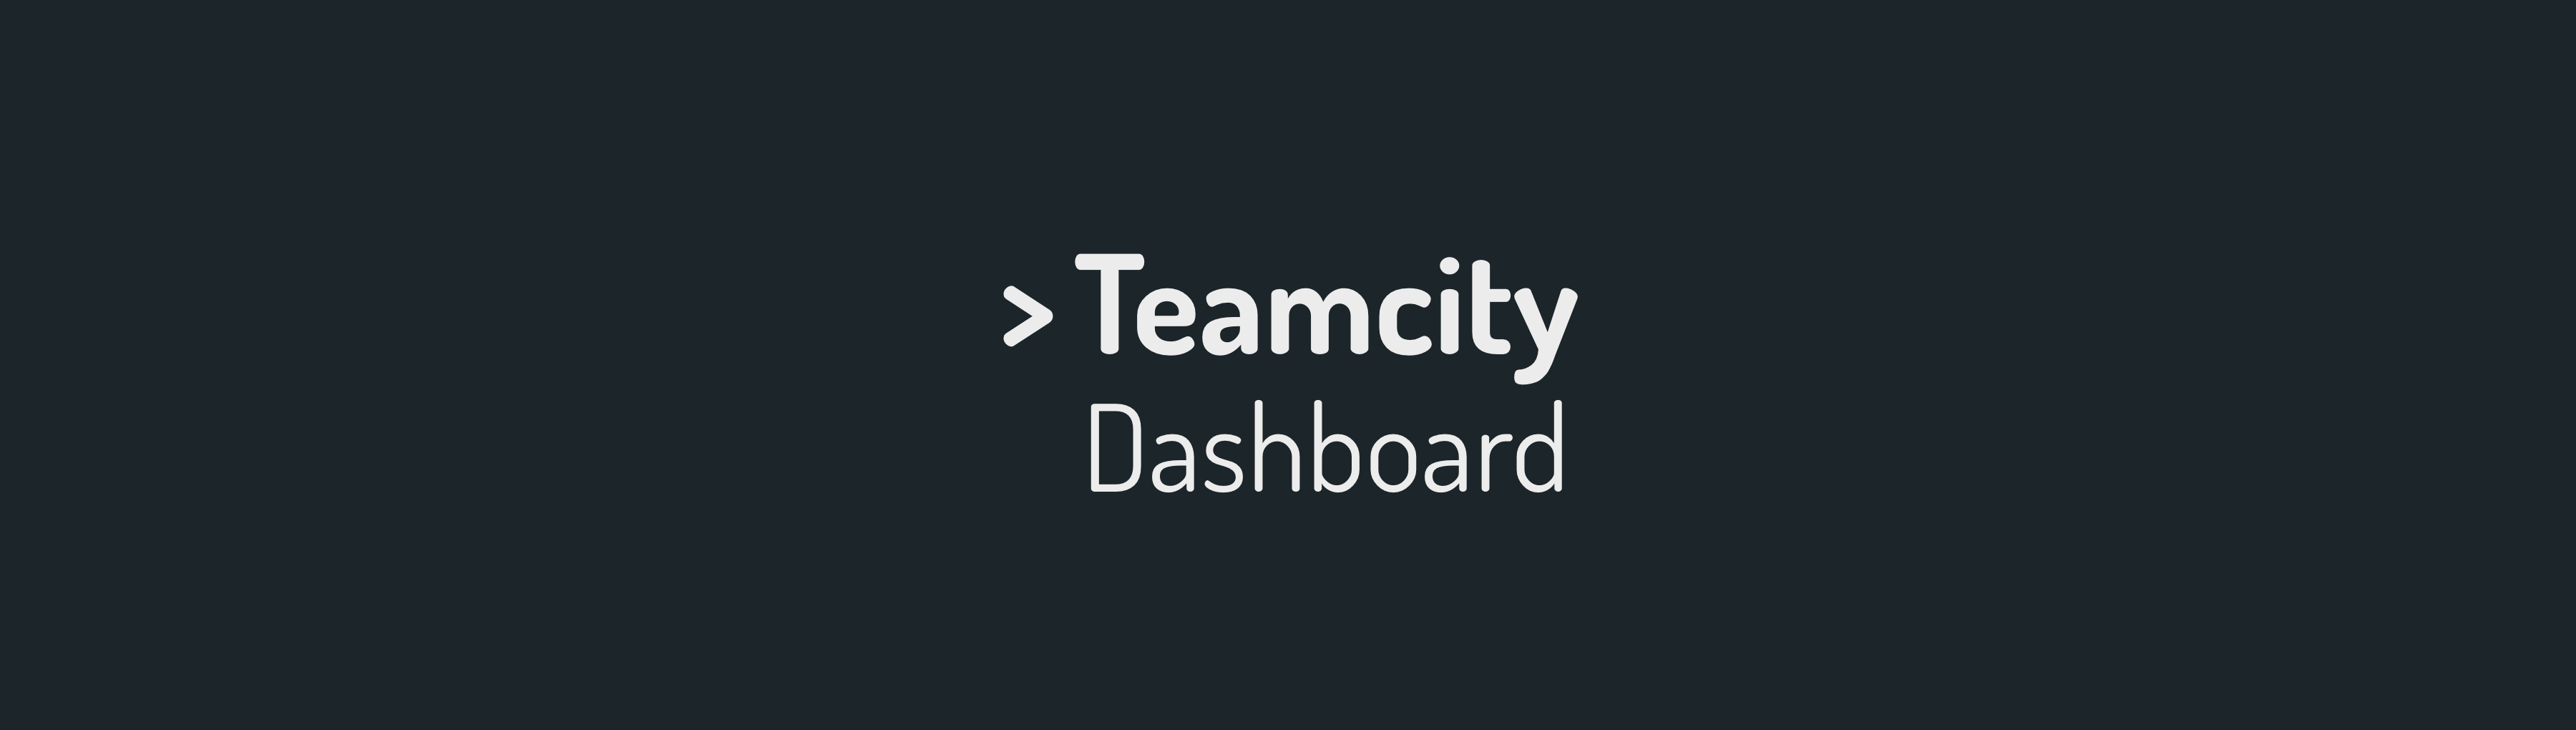 teamcity login